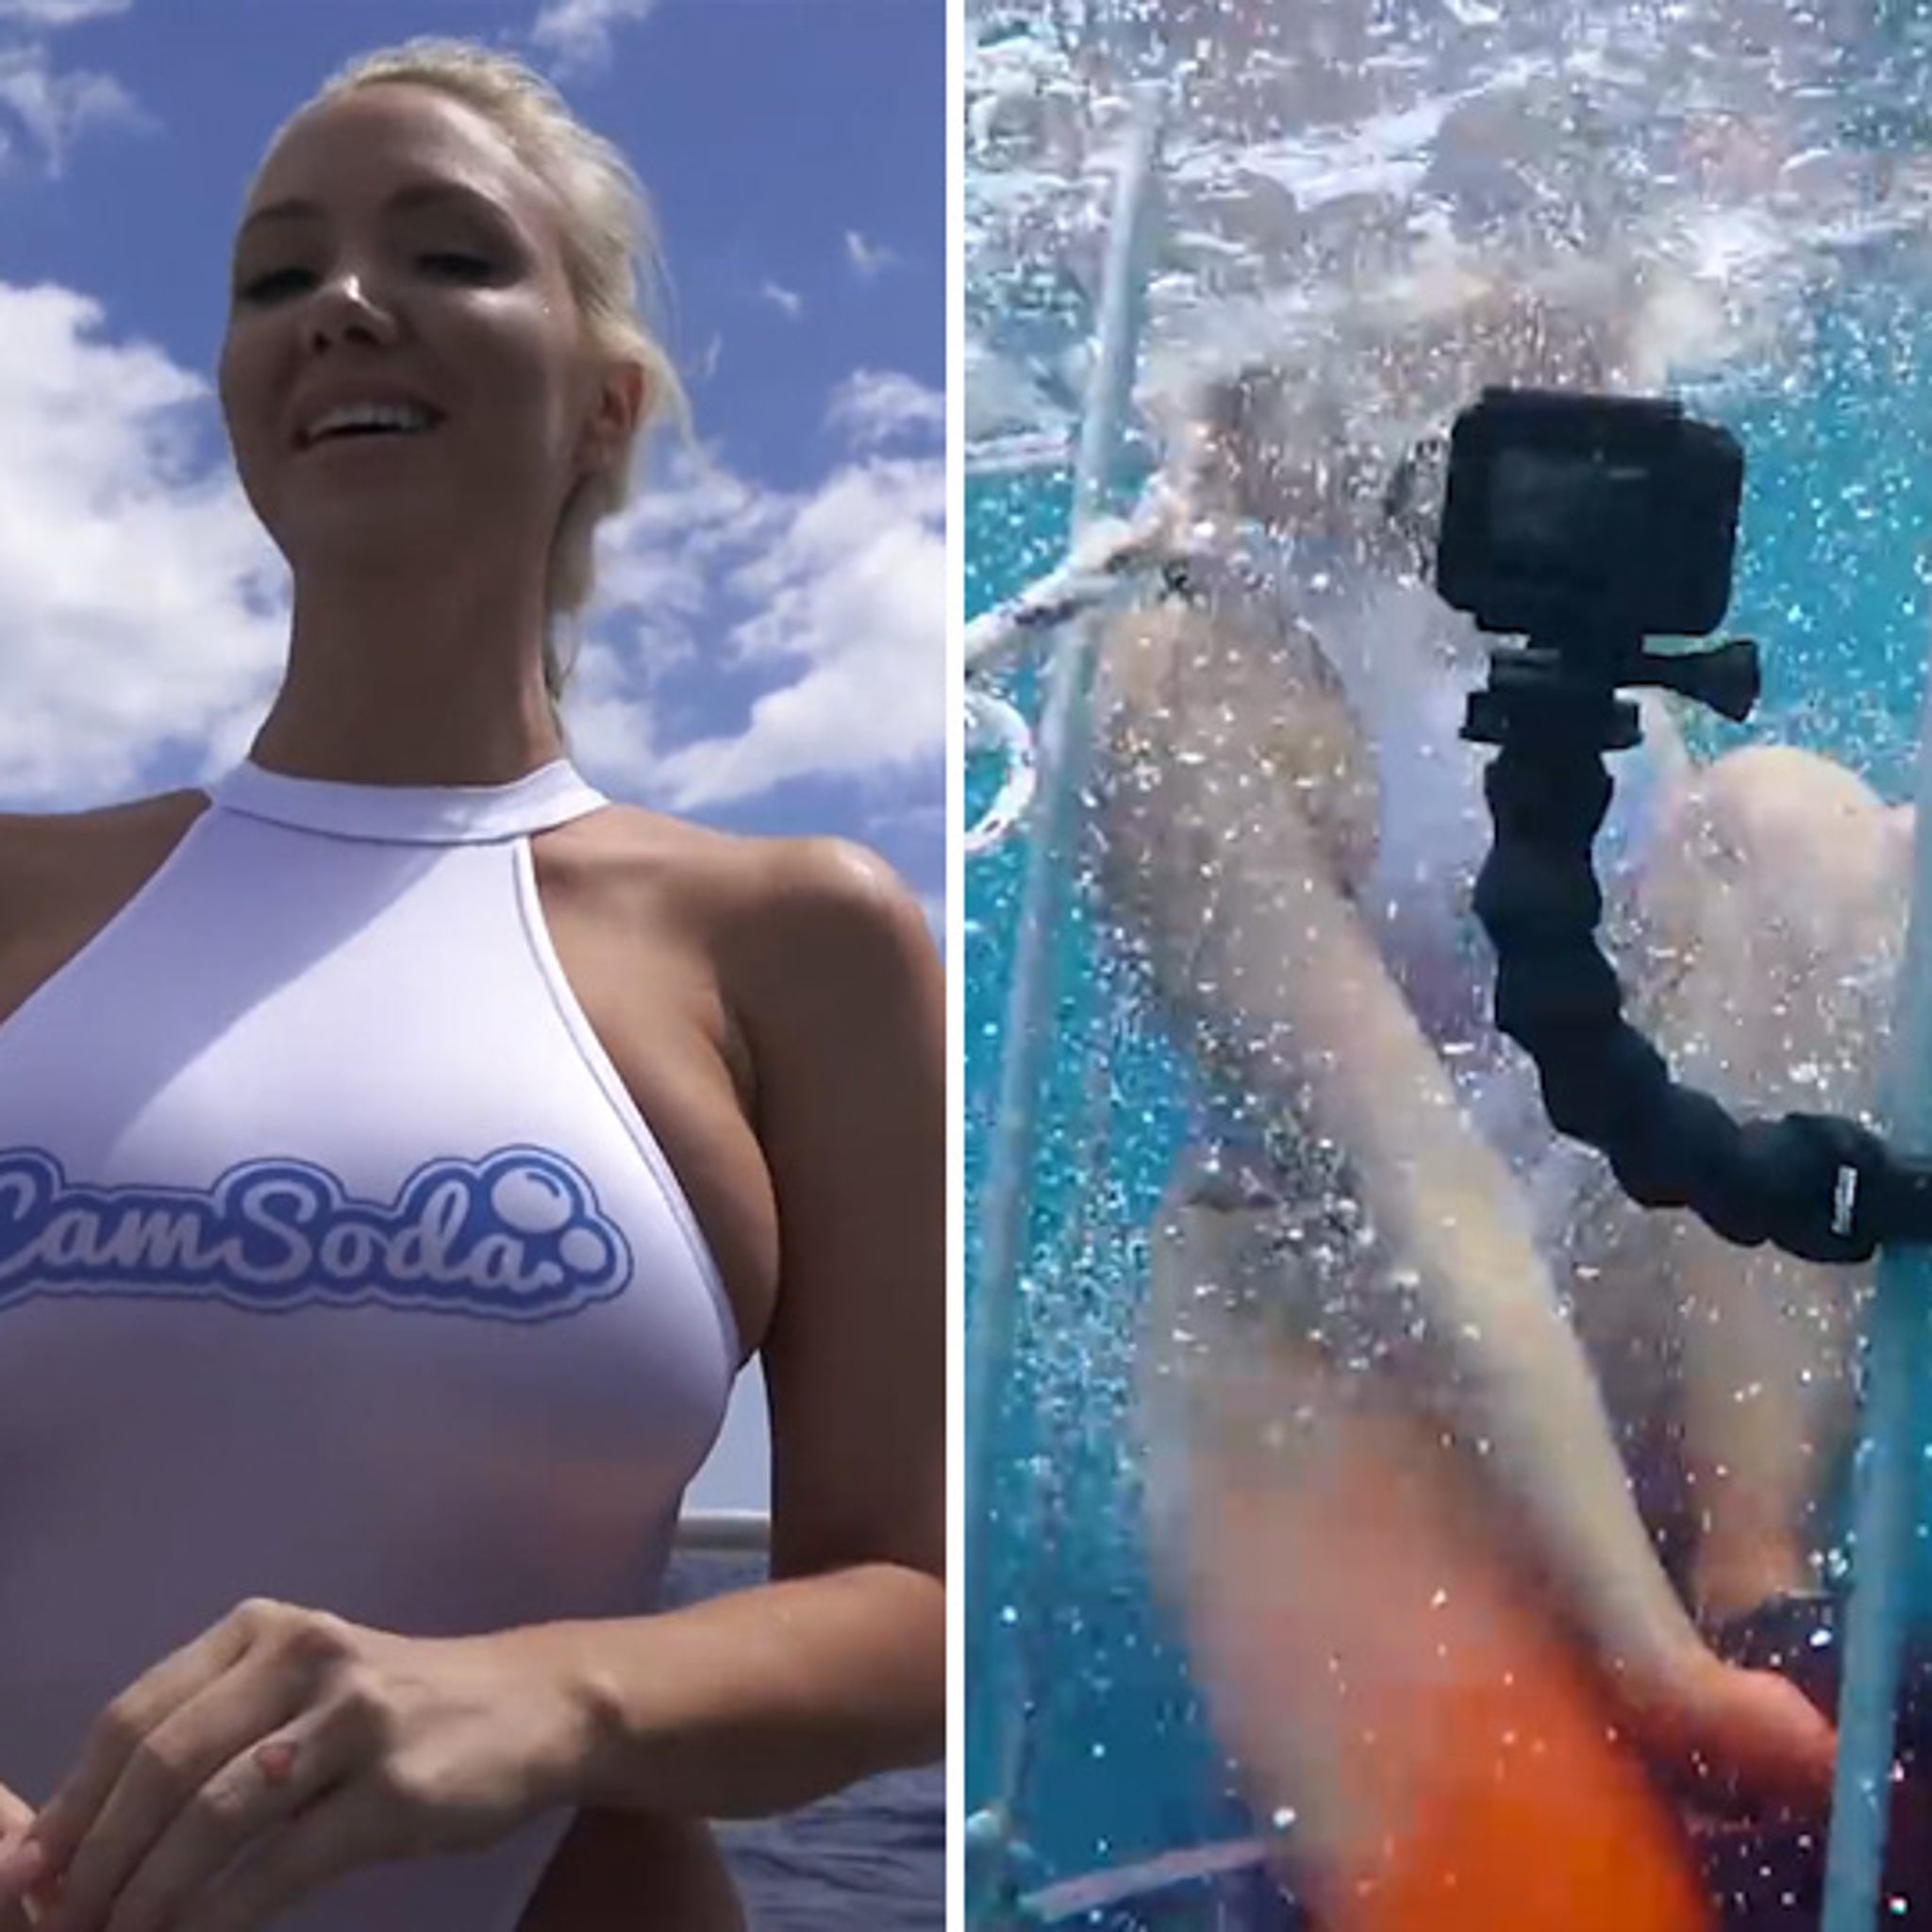 2048px x 2048px - Porn Star Bitten by Shark While Filming Underwater Scene